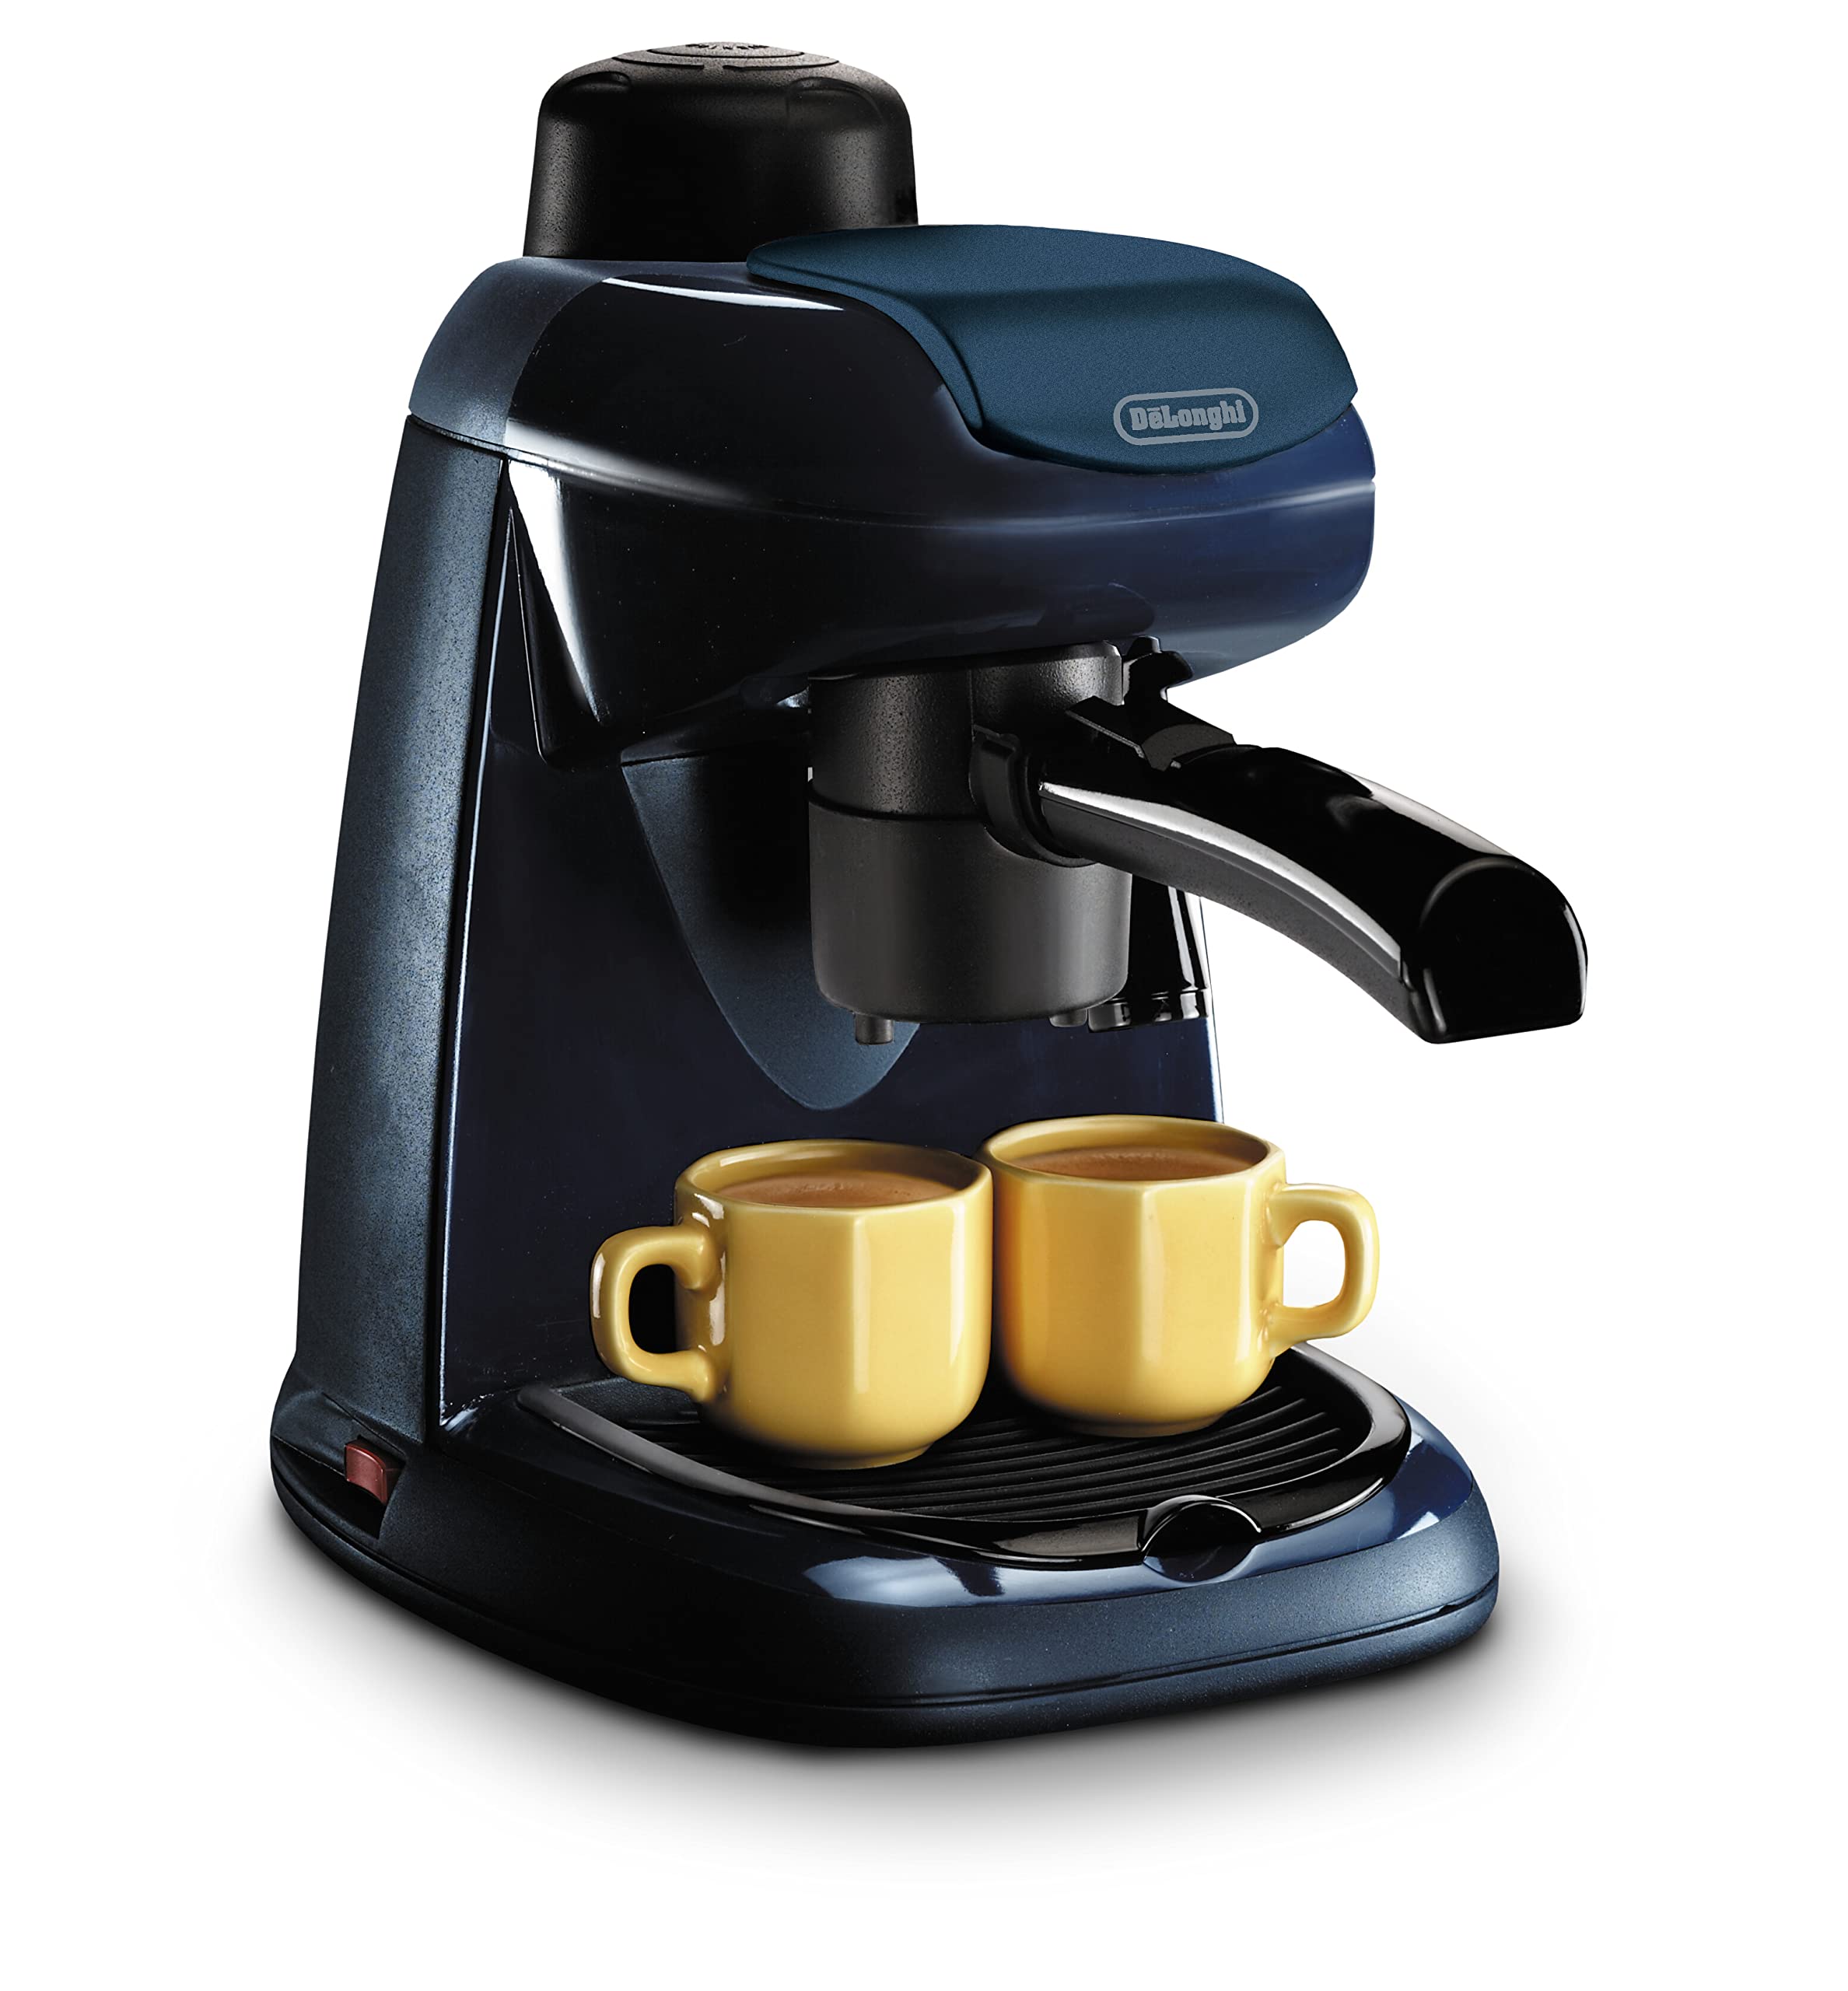 De'Longhi Automatic Coffee Machine, Barista Pump Espresso and Cappuccino Maker, Ground Coffee  ماكينة تحضير القهوة الاوتوماتيكية من ديلونجي، باريستا بامب اسبريسو وصانعة الكابتشينو، يمكن استخدام البن المطحون